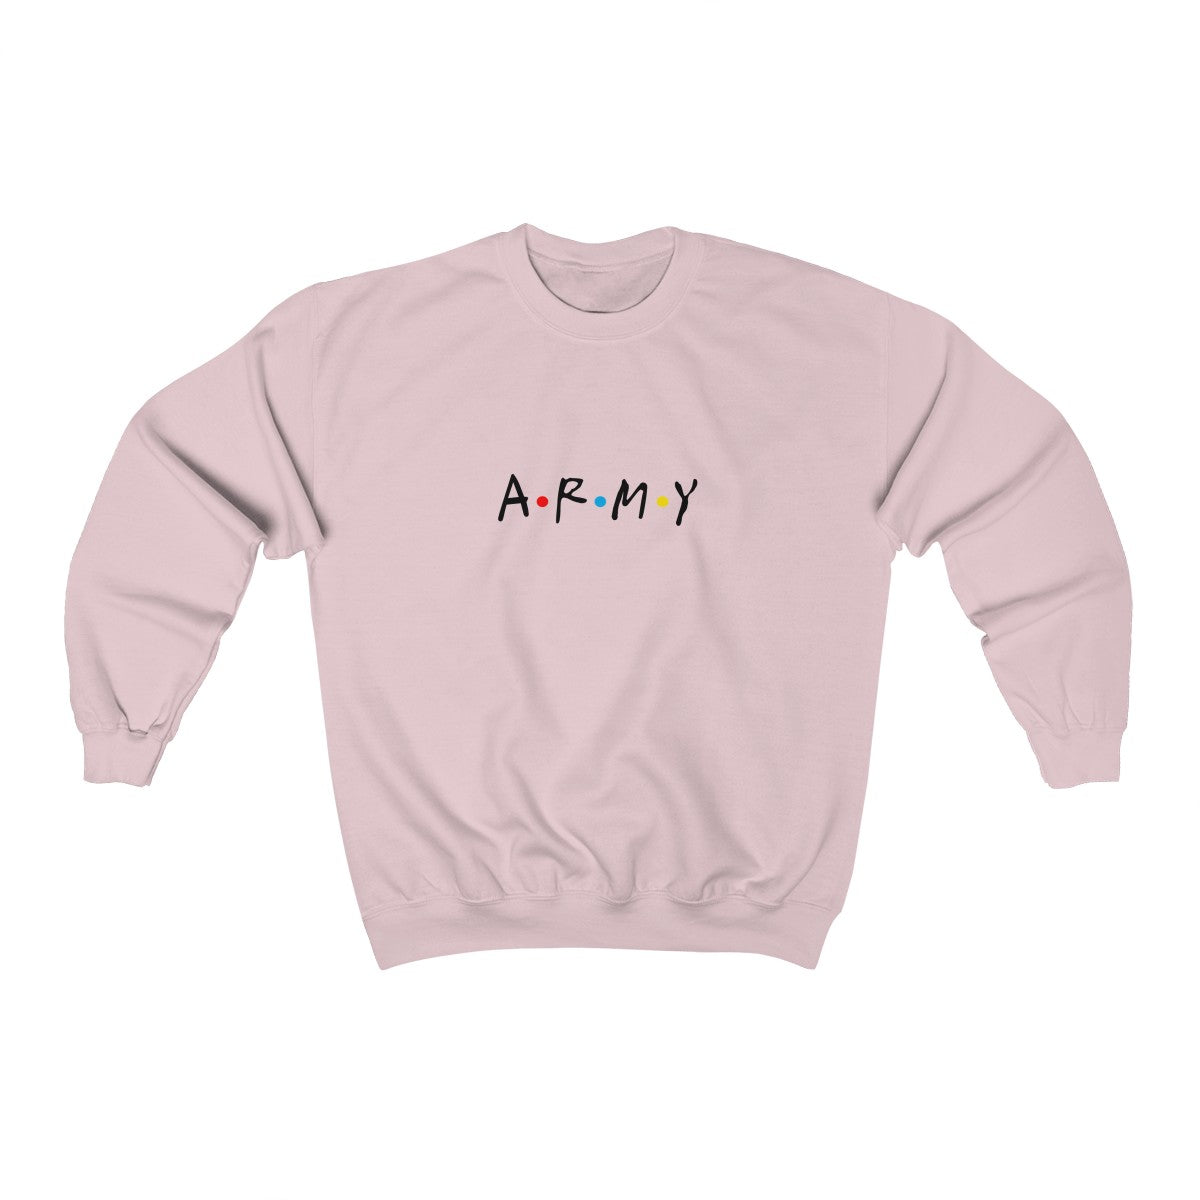 ARMY "Friends" Style Sweatshirt